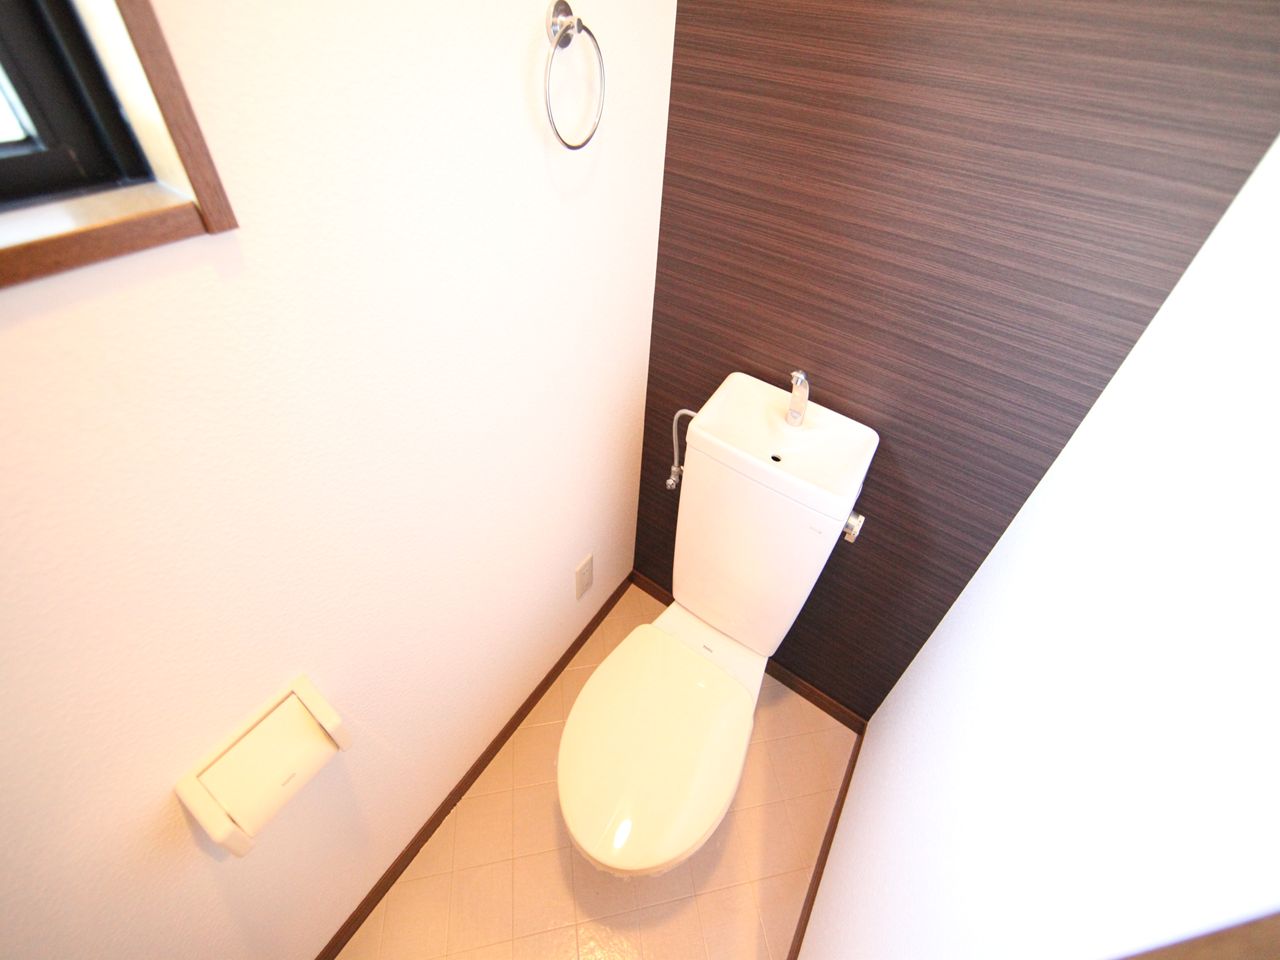 Toilet. toilet With windows (ventilation good)